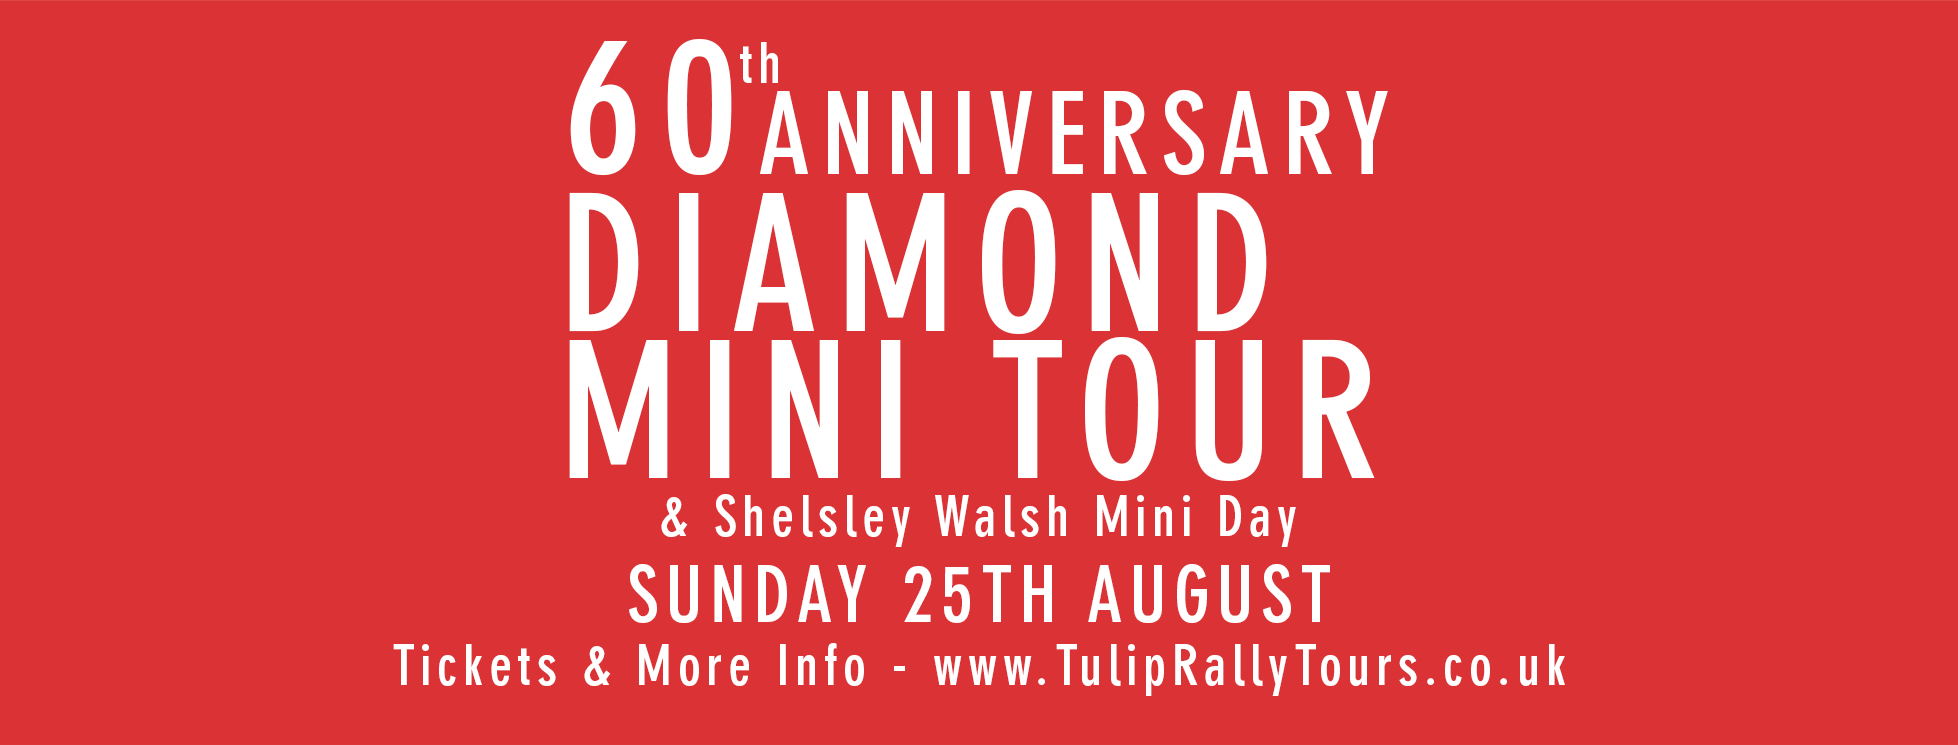 Tulip Rally Tours 60th Anniversary Diamond Mini Tour & Shesley Walsh Mini Day